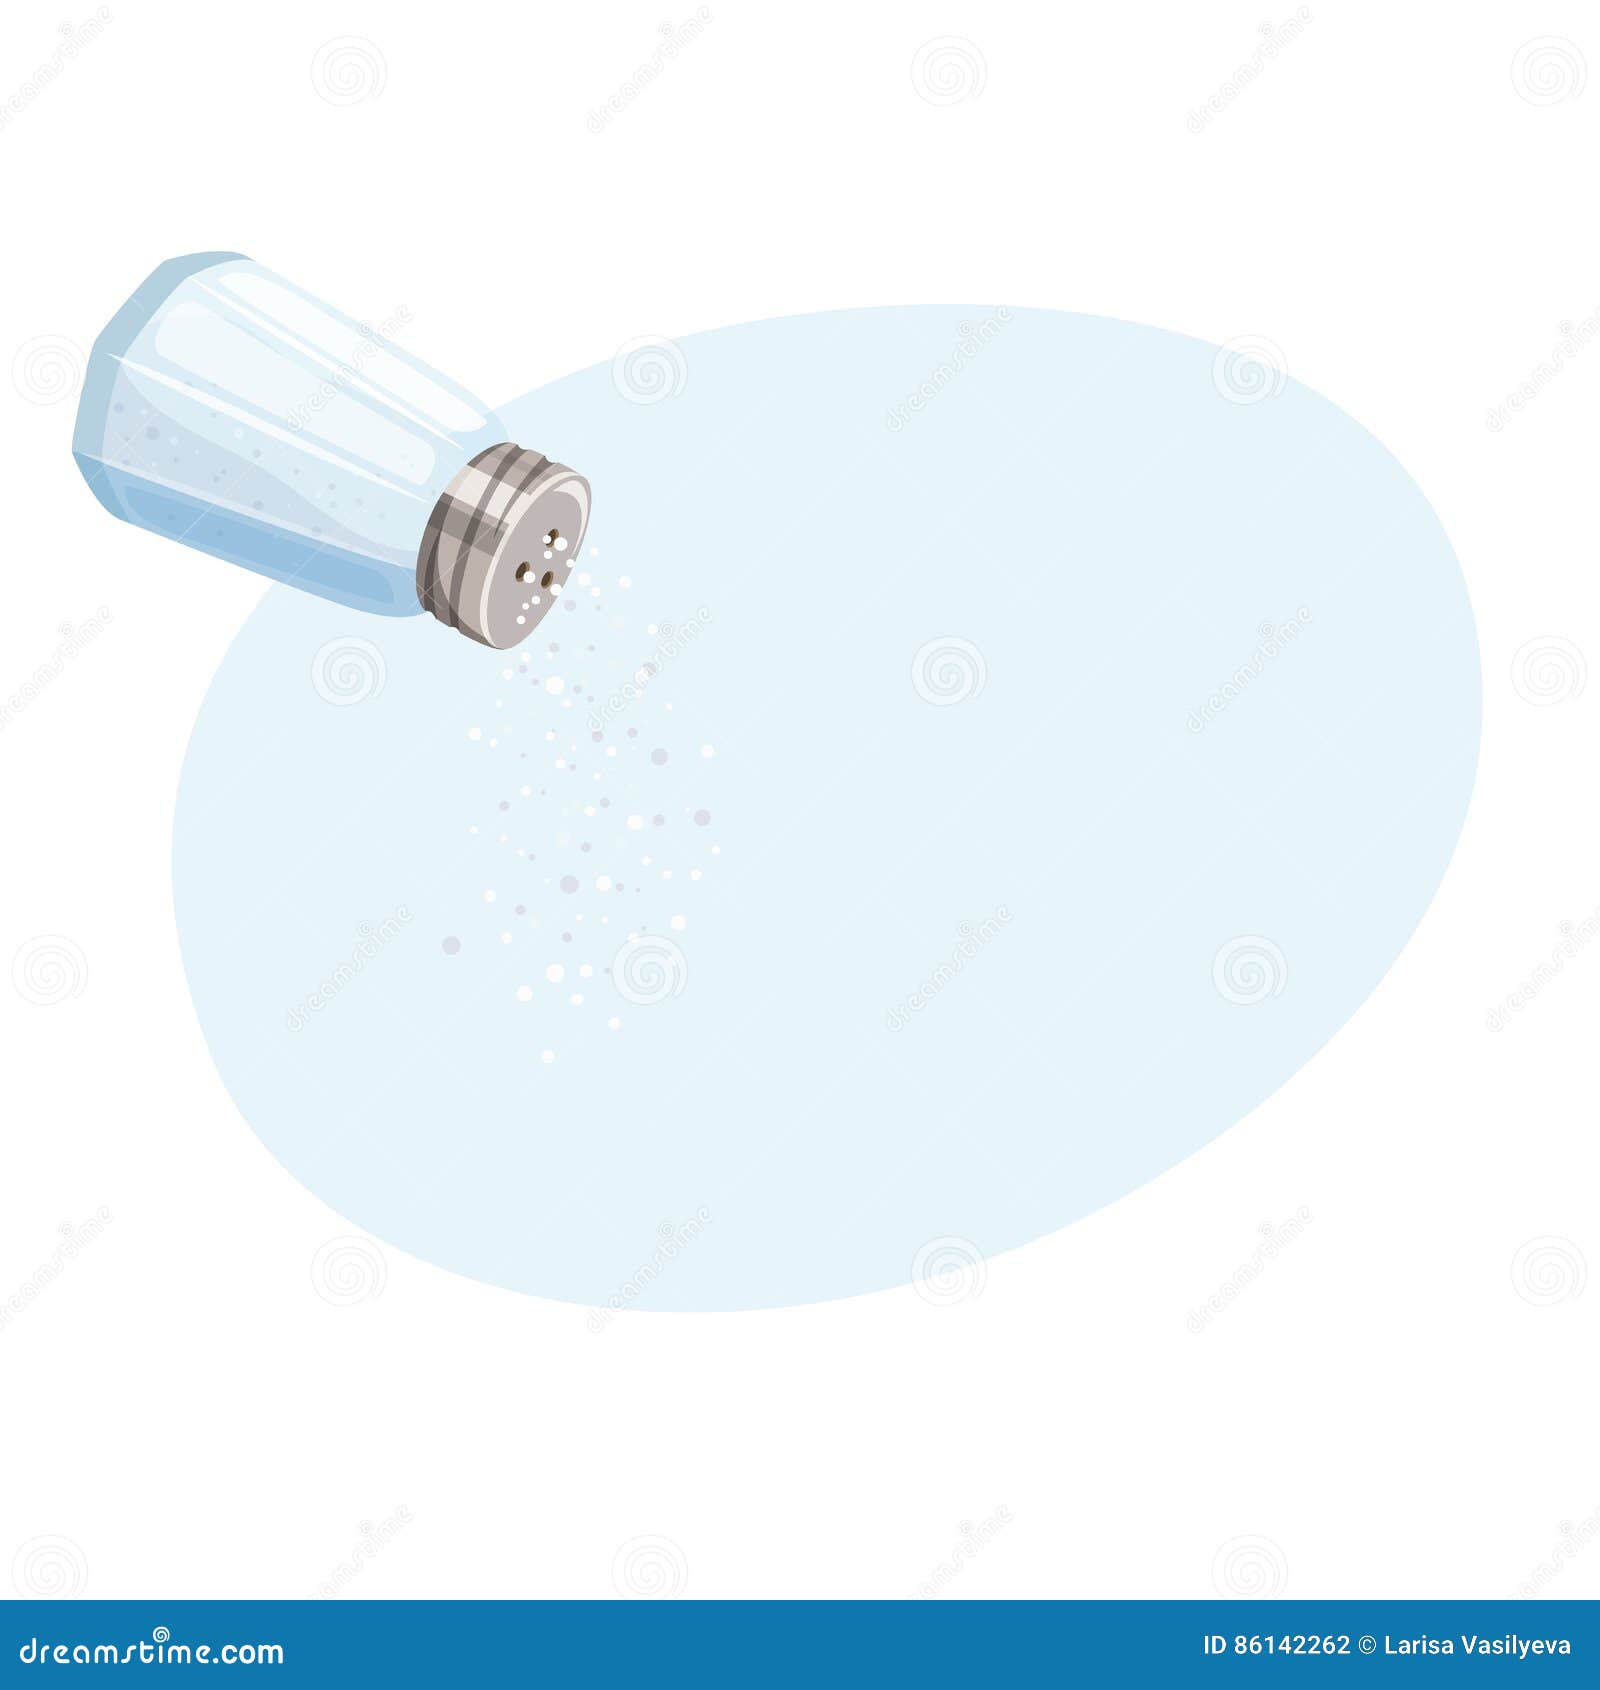 do pour salt from salt shaker